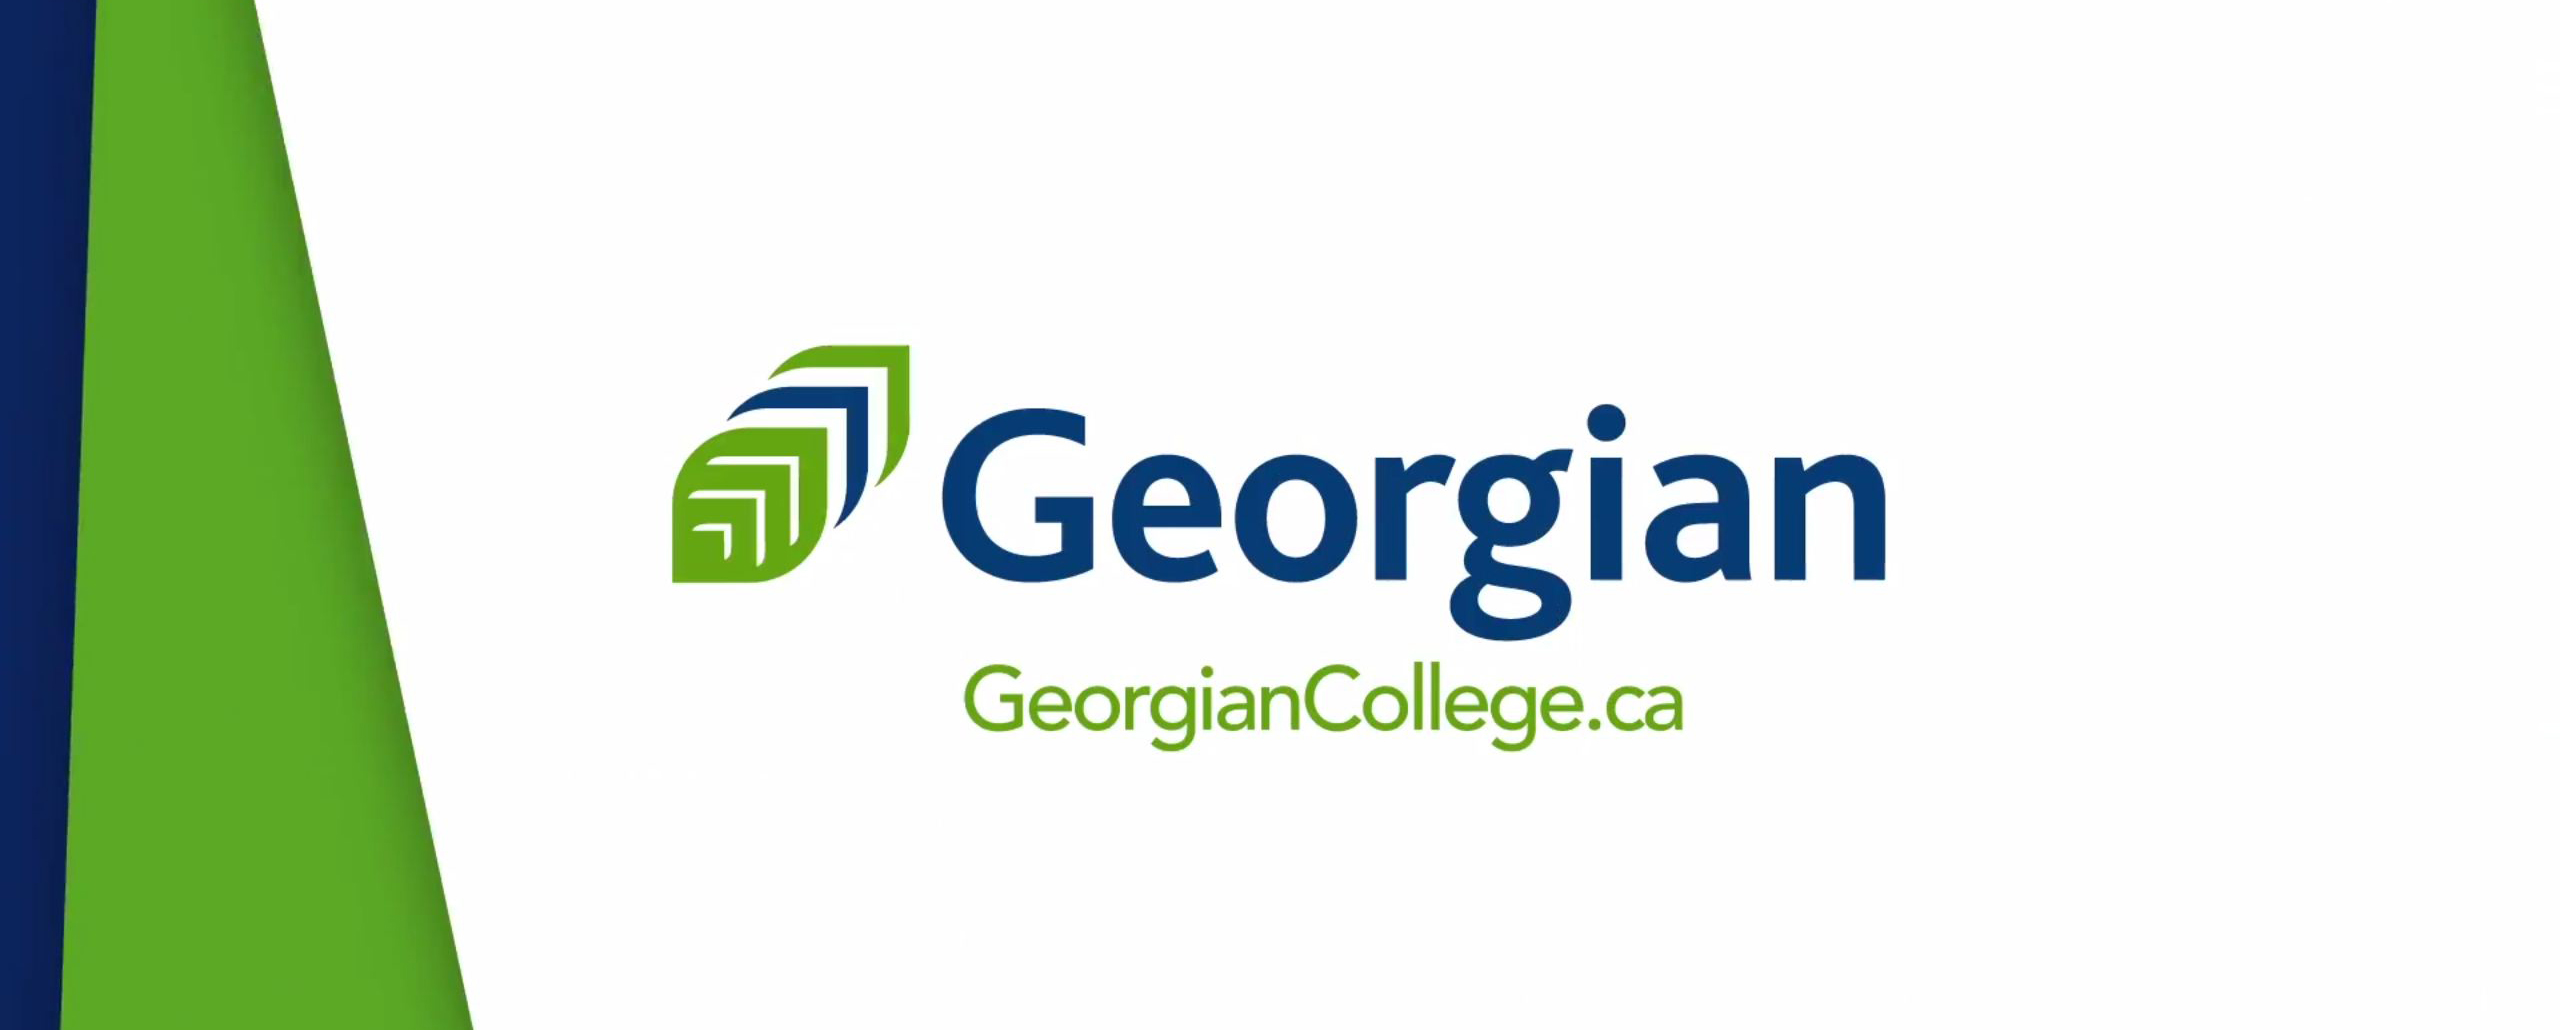 Marketing-New brand slider-Georgian College-201408 ...